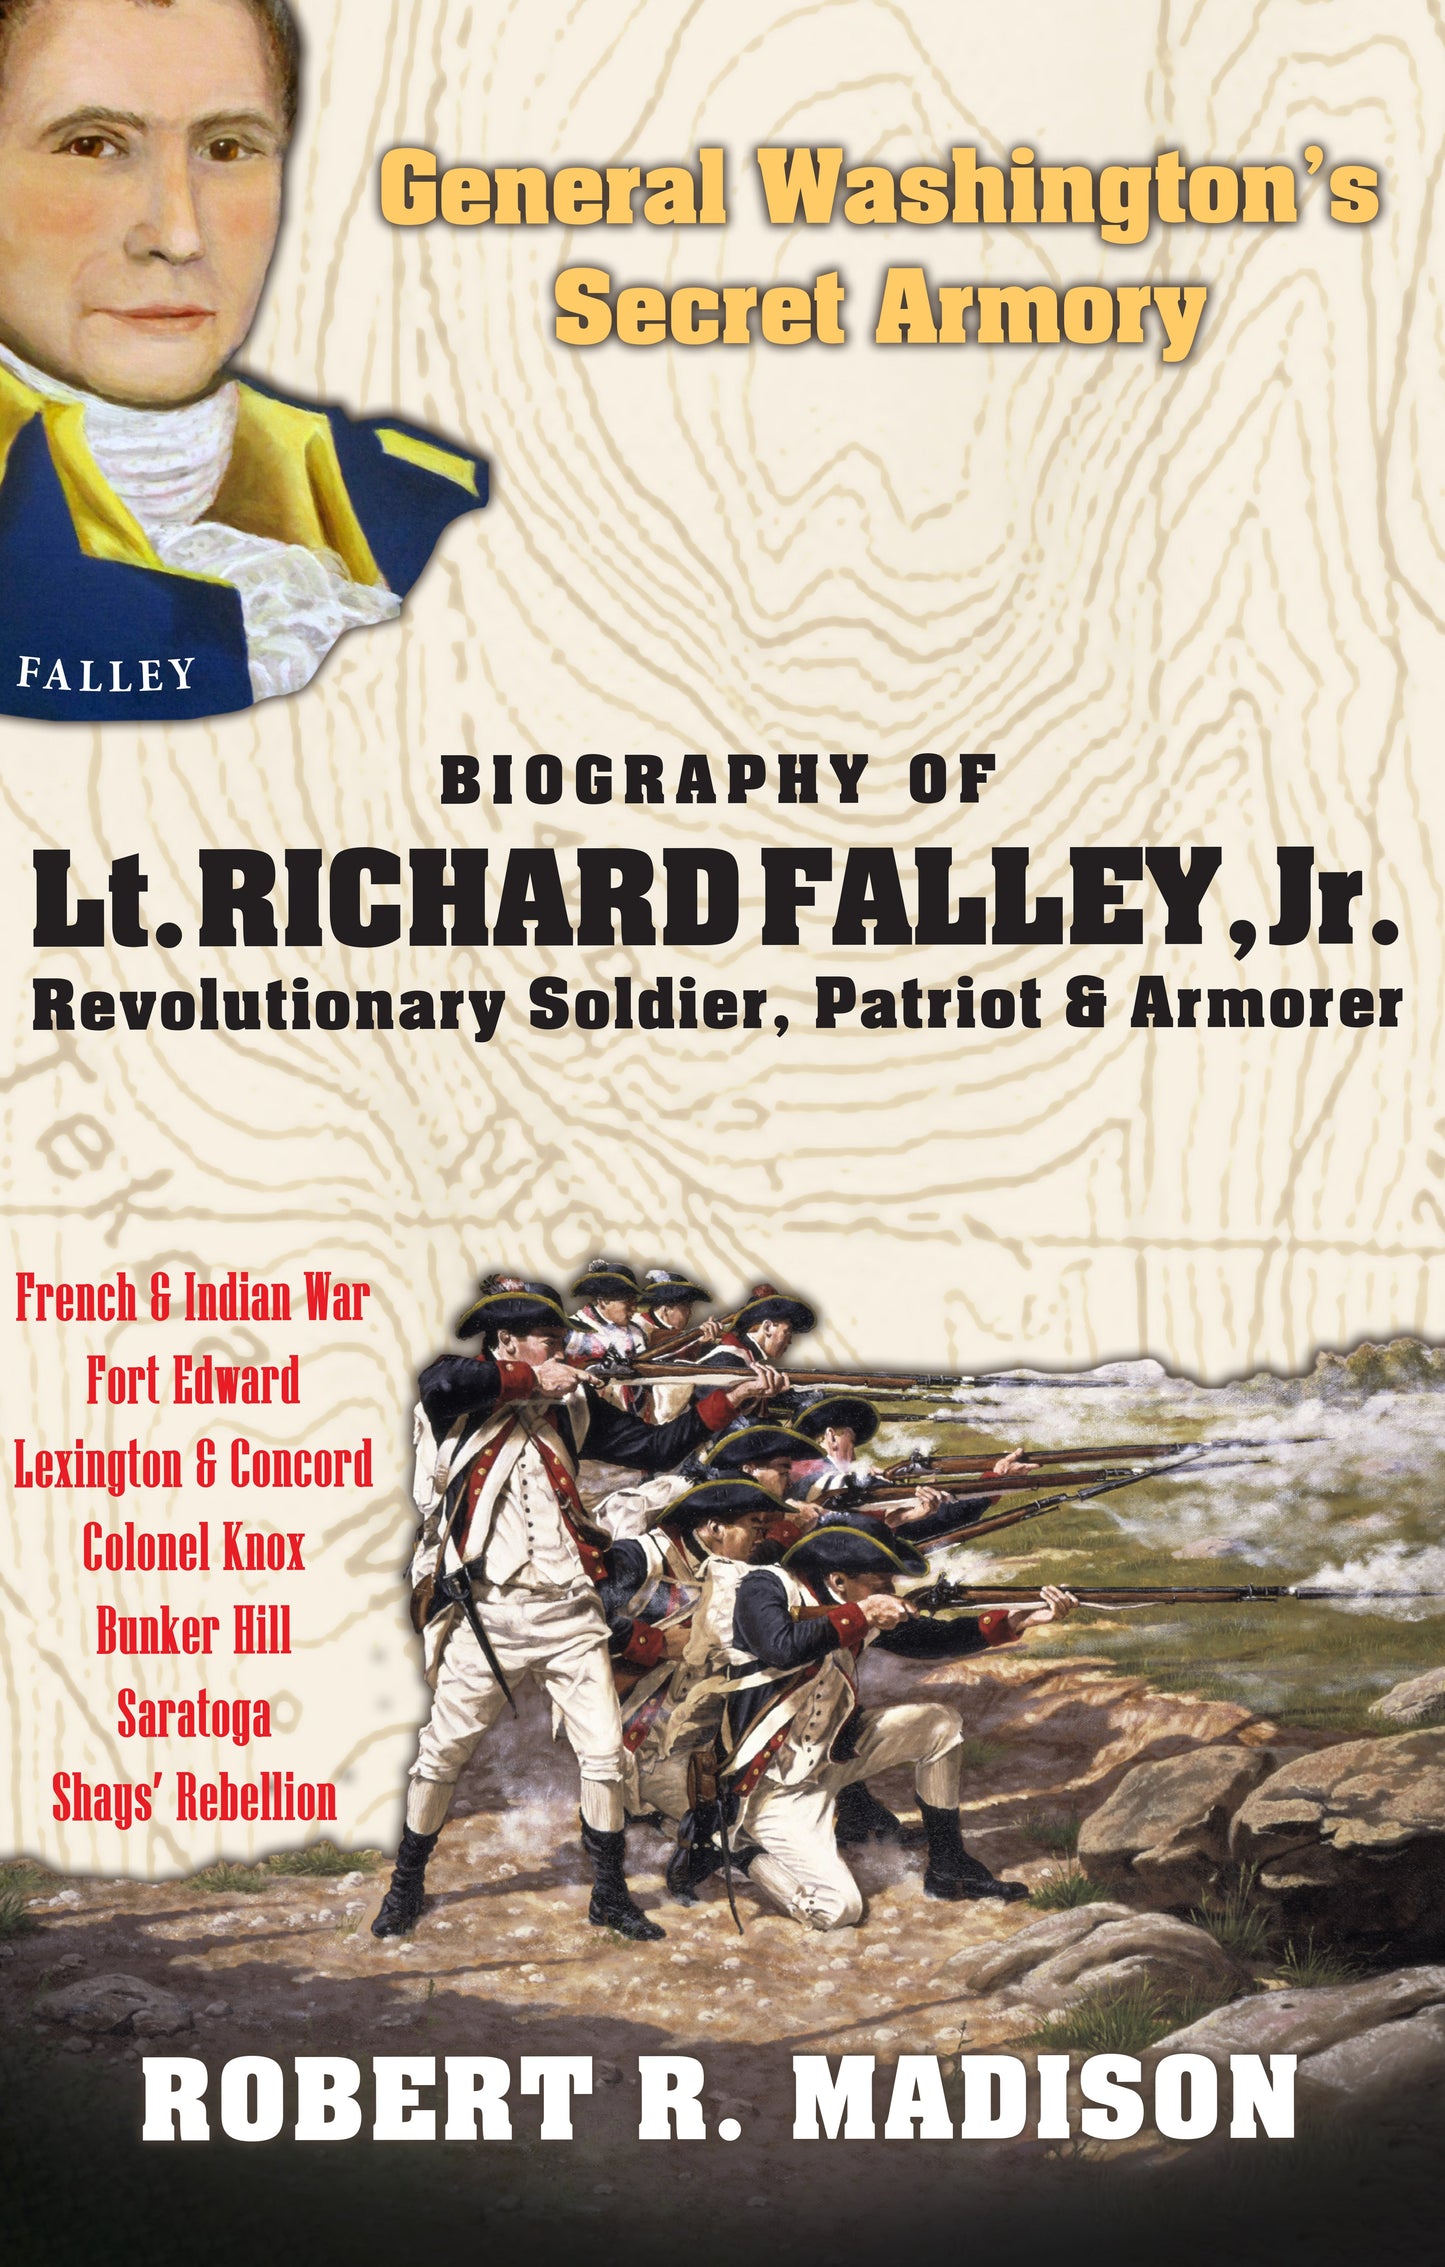 Biography of Lt. Falley, Jr.